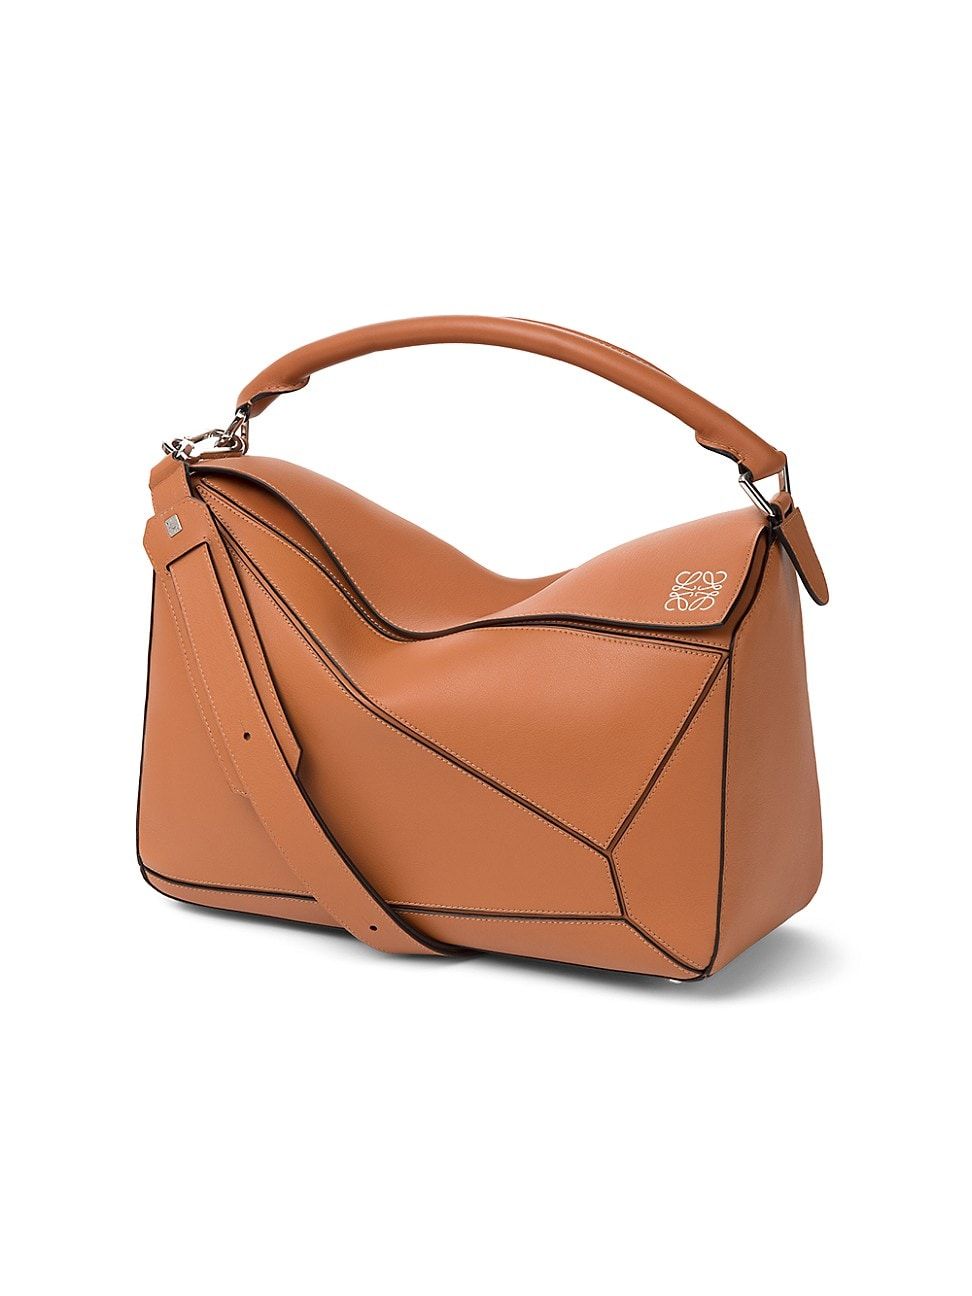 Designer Crossbody Bags Australia | Parlour X